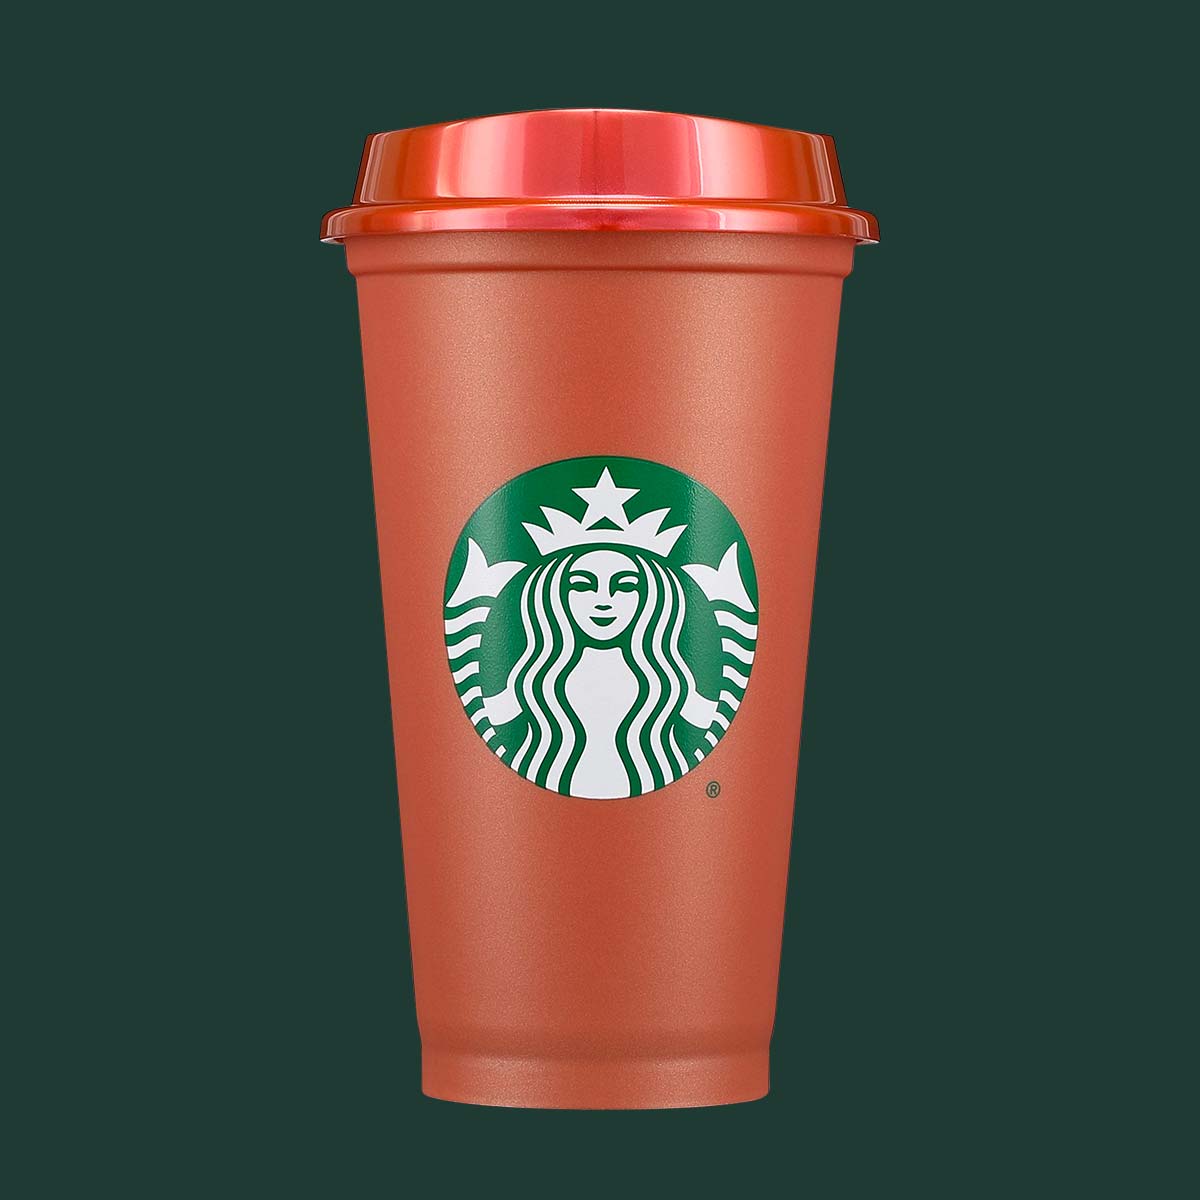 Starbucks Orange Pearl Reusable Hot Cup.